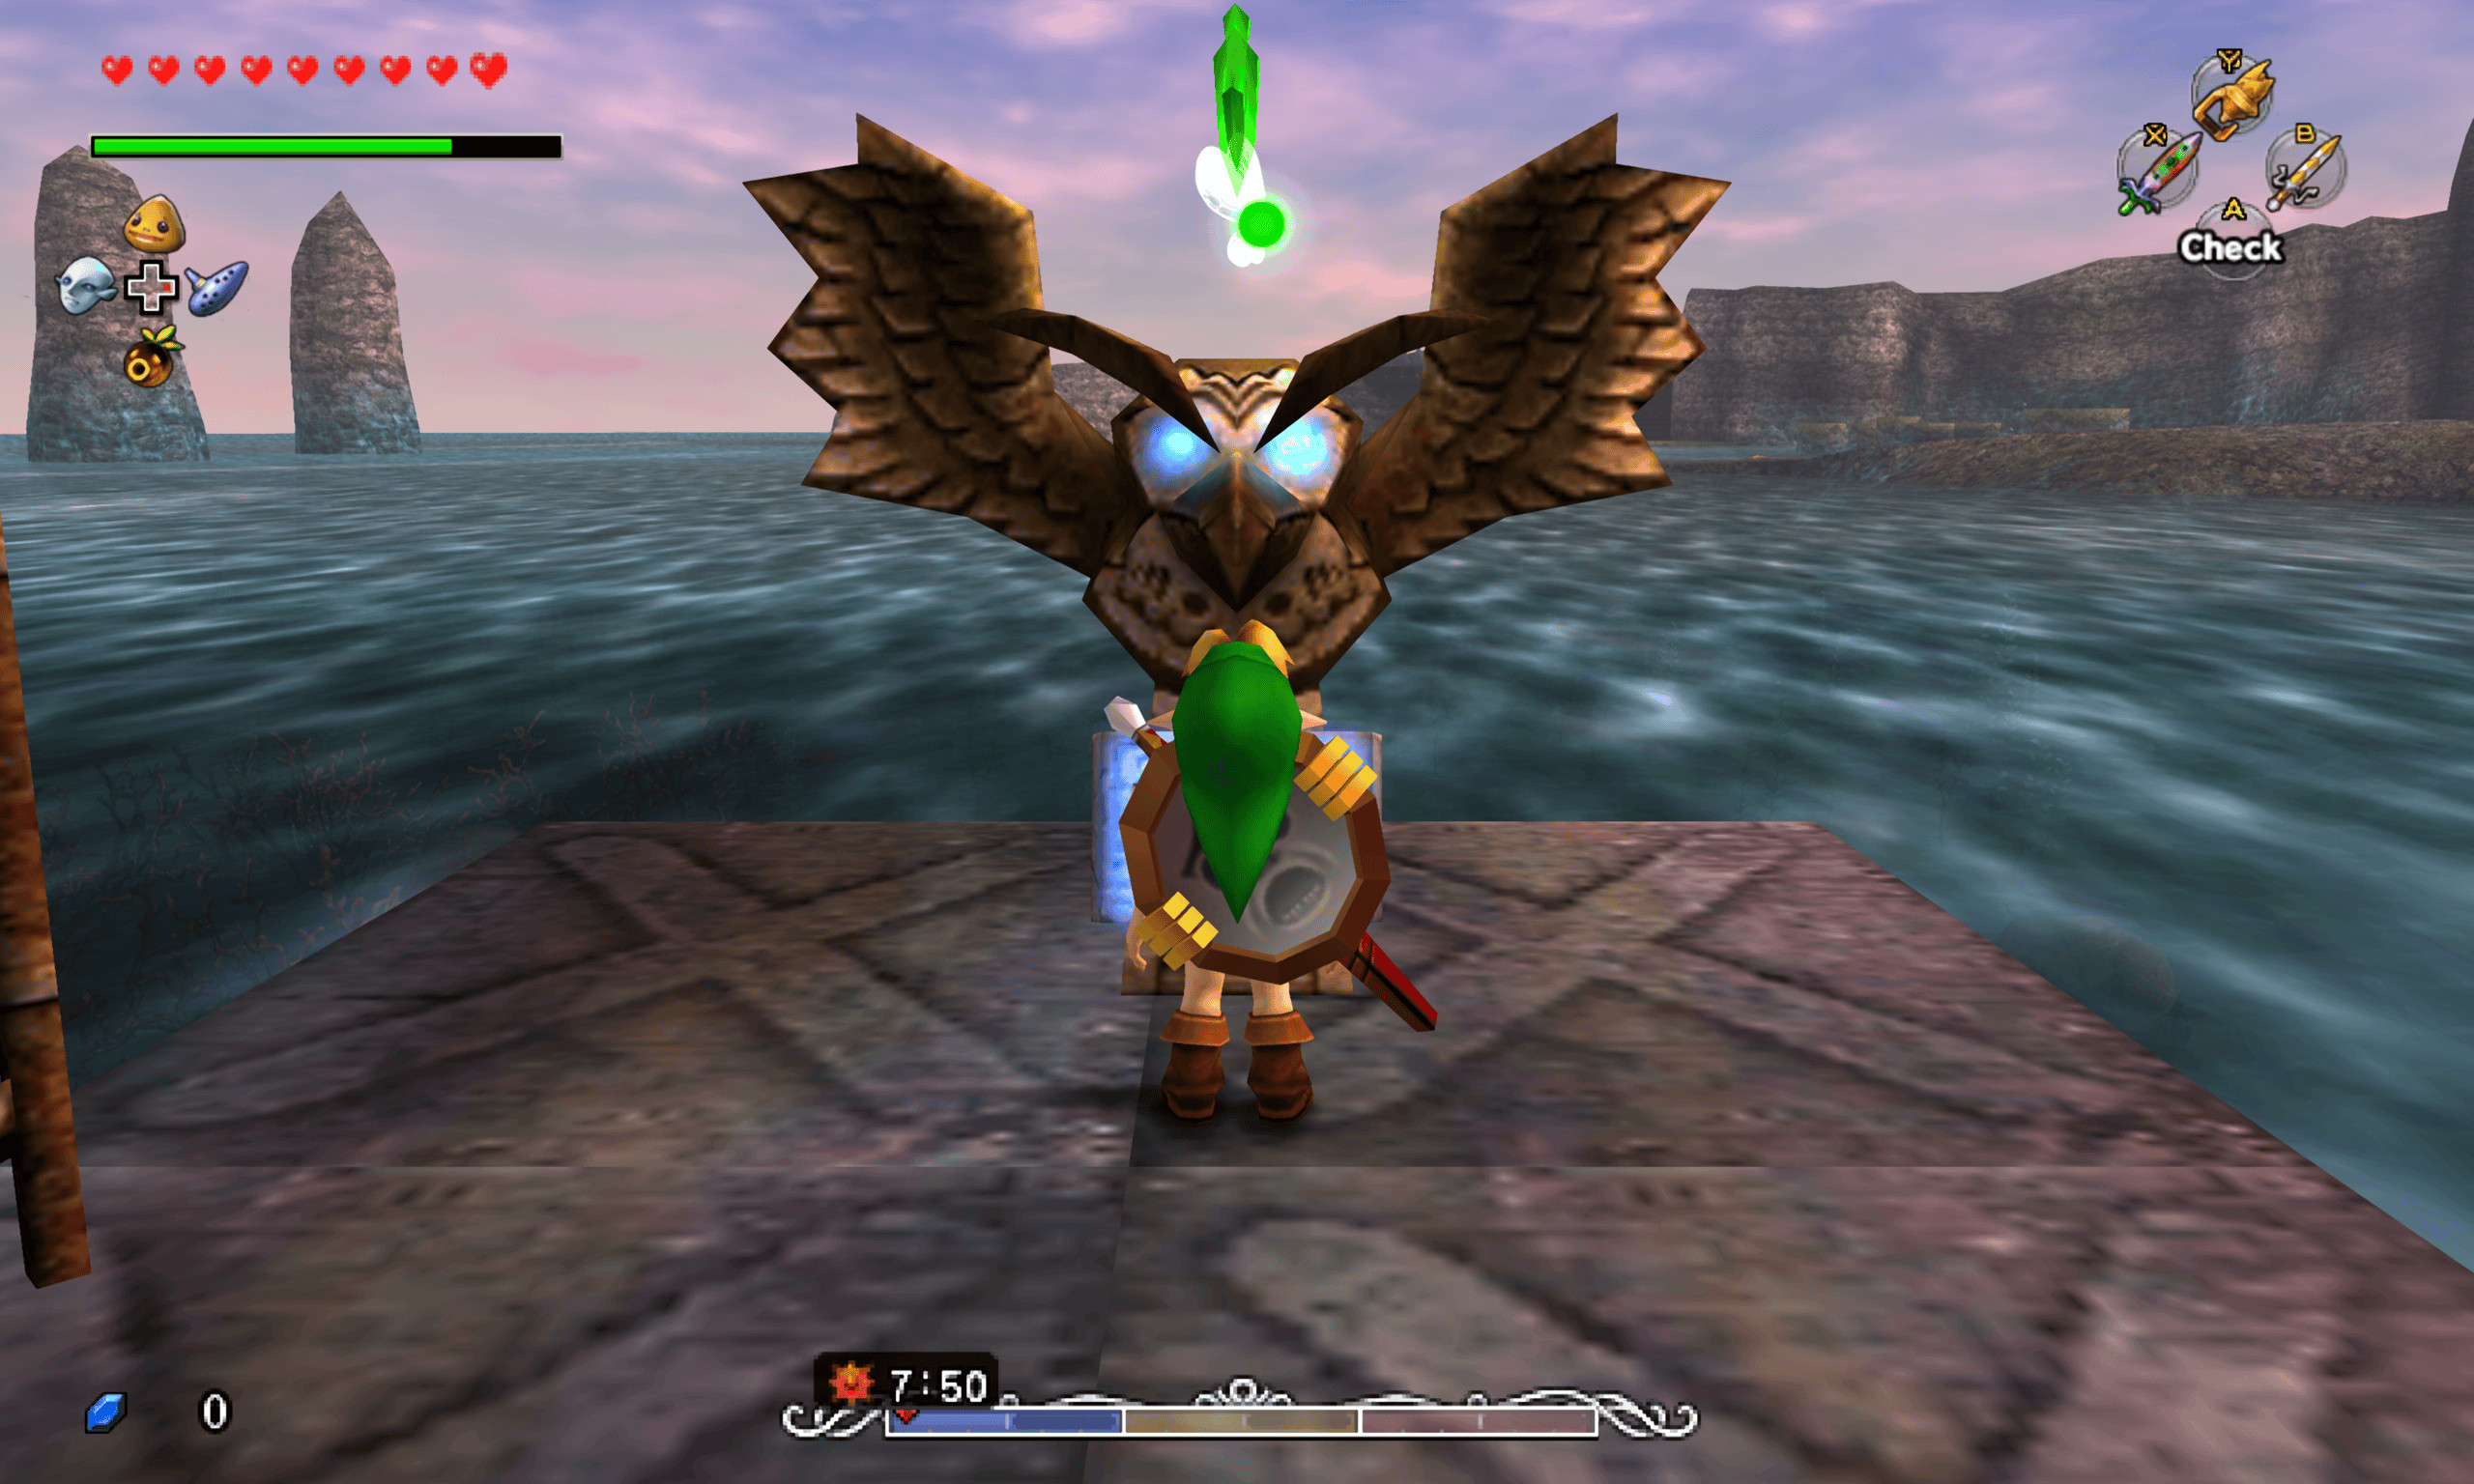 Zelda: Ocarina of Time 3D 4K Texture Pack